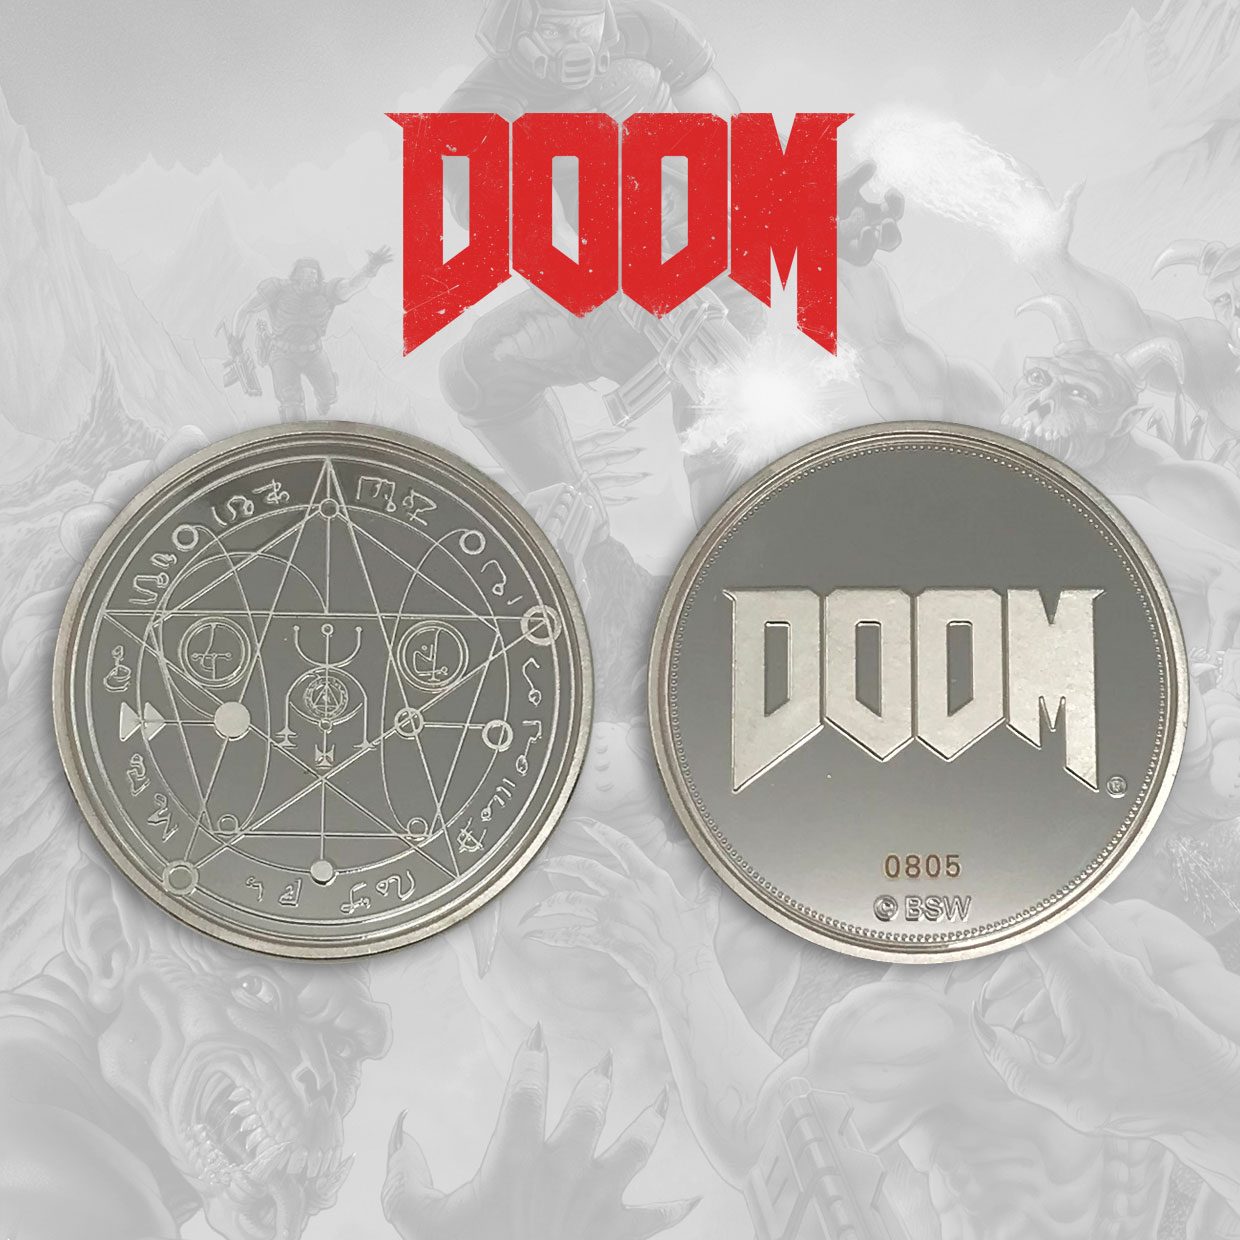 Doom pice de collection Logo